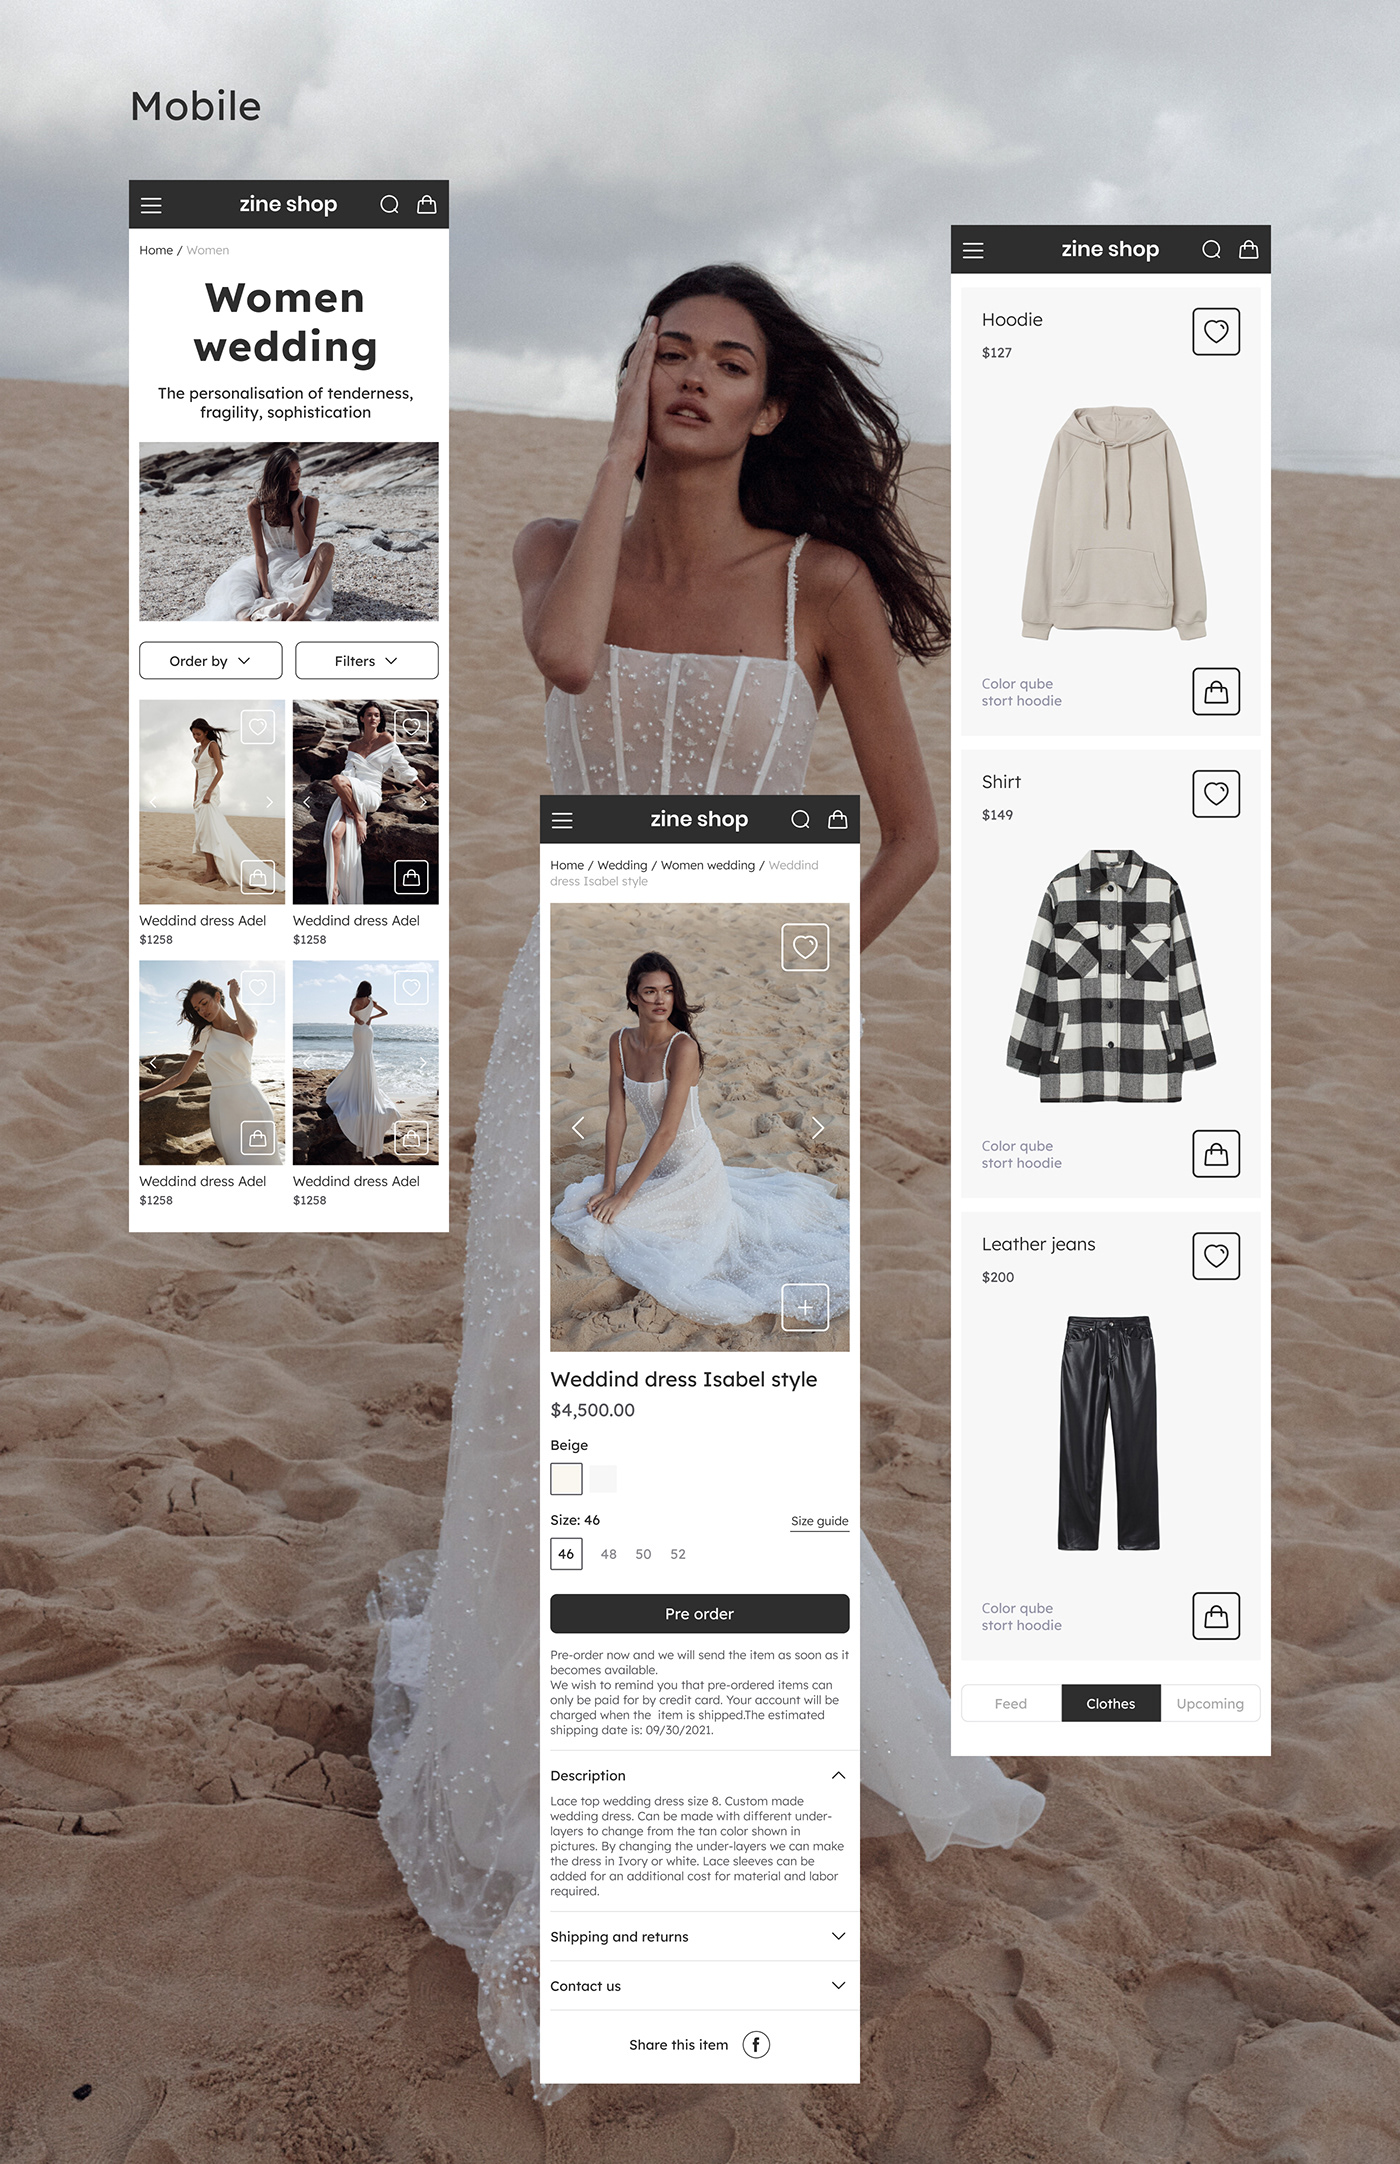 clothes e-commerce Ecommerce Fashion  ux/ui Website интернет-магазин интернет-магазин одежды магазин одежды мода